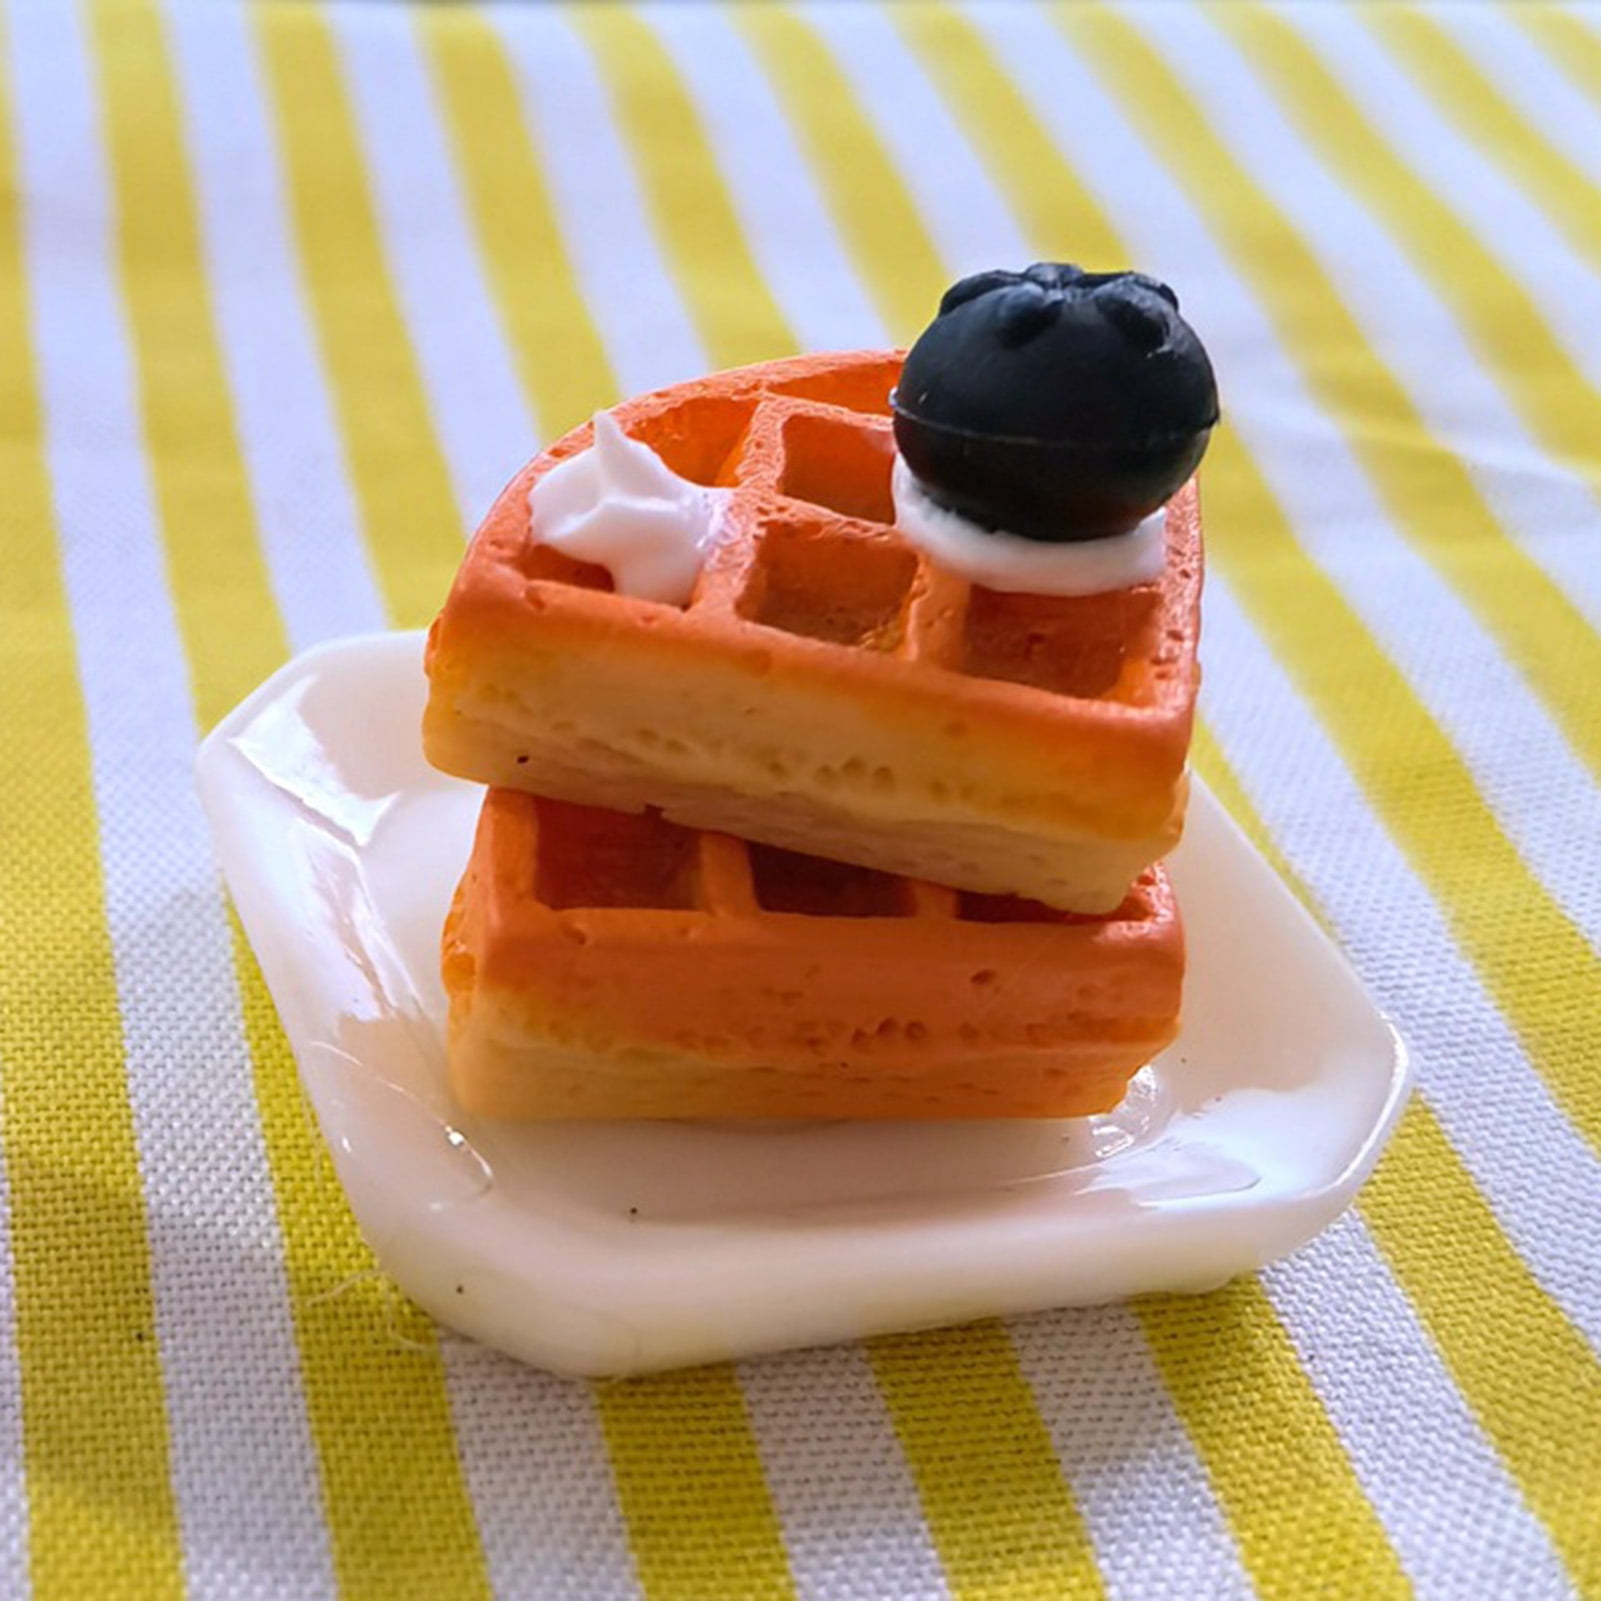 Waffle Breakfast 2 Pk Surprise Set of Miniature 1:6 Scale Plates